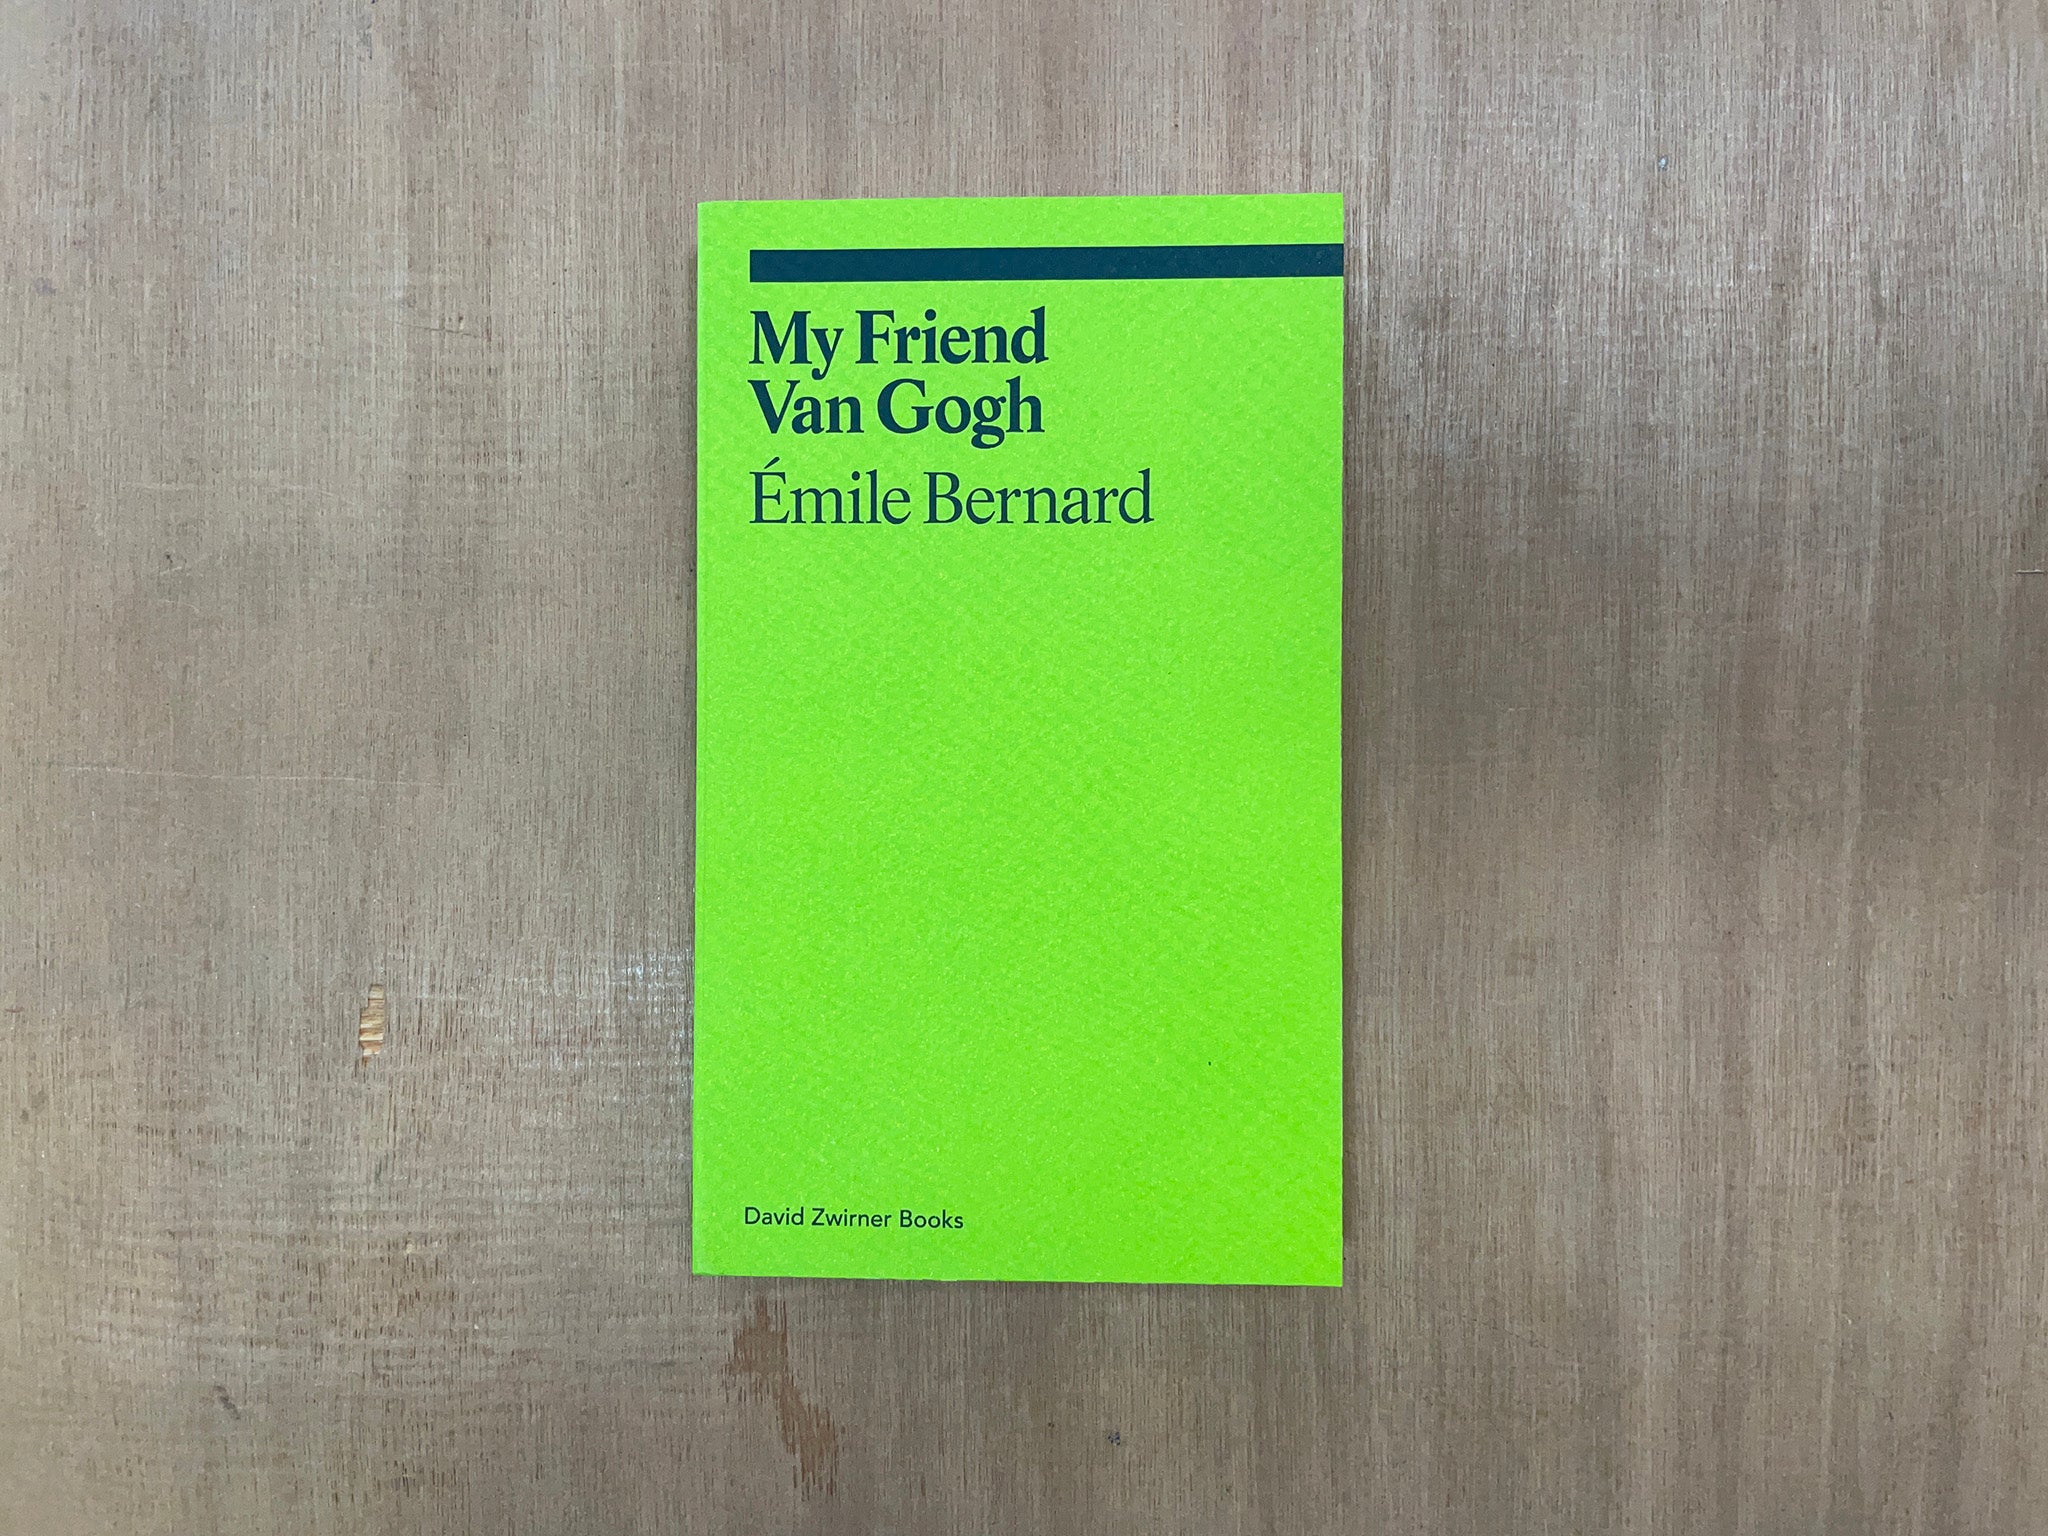 MY FRIEND VAN GOGH by Émile Bernard